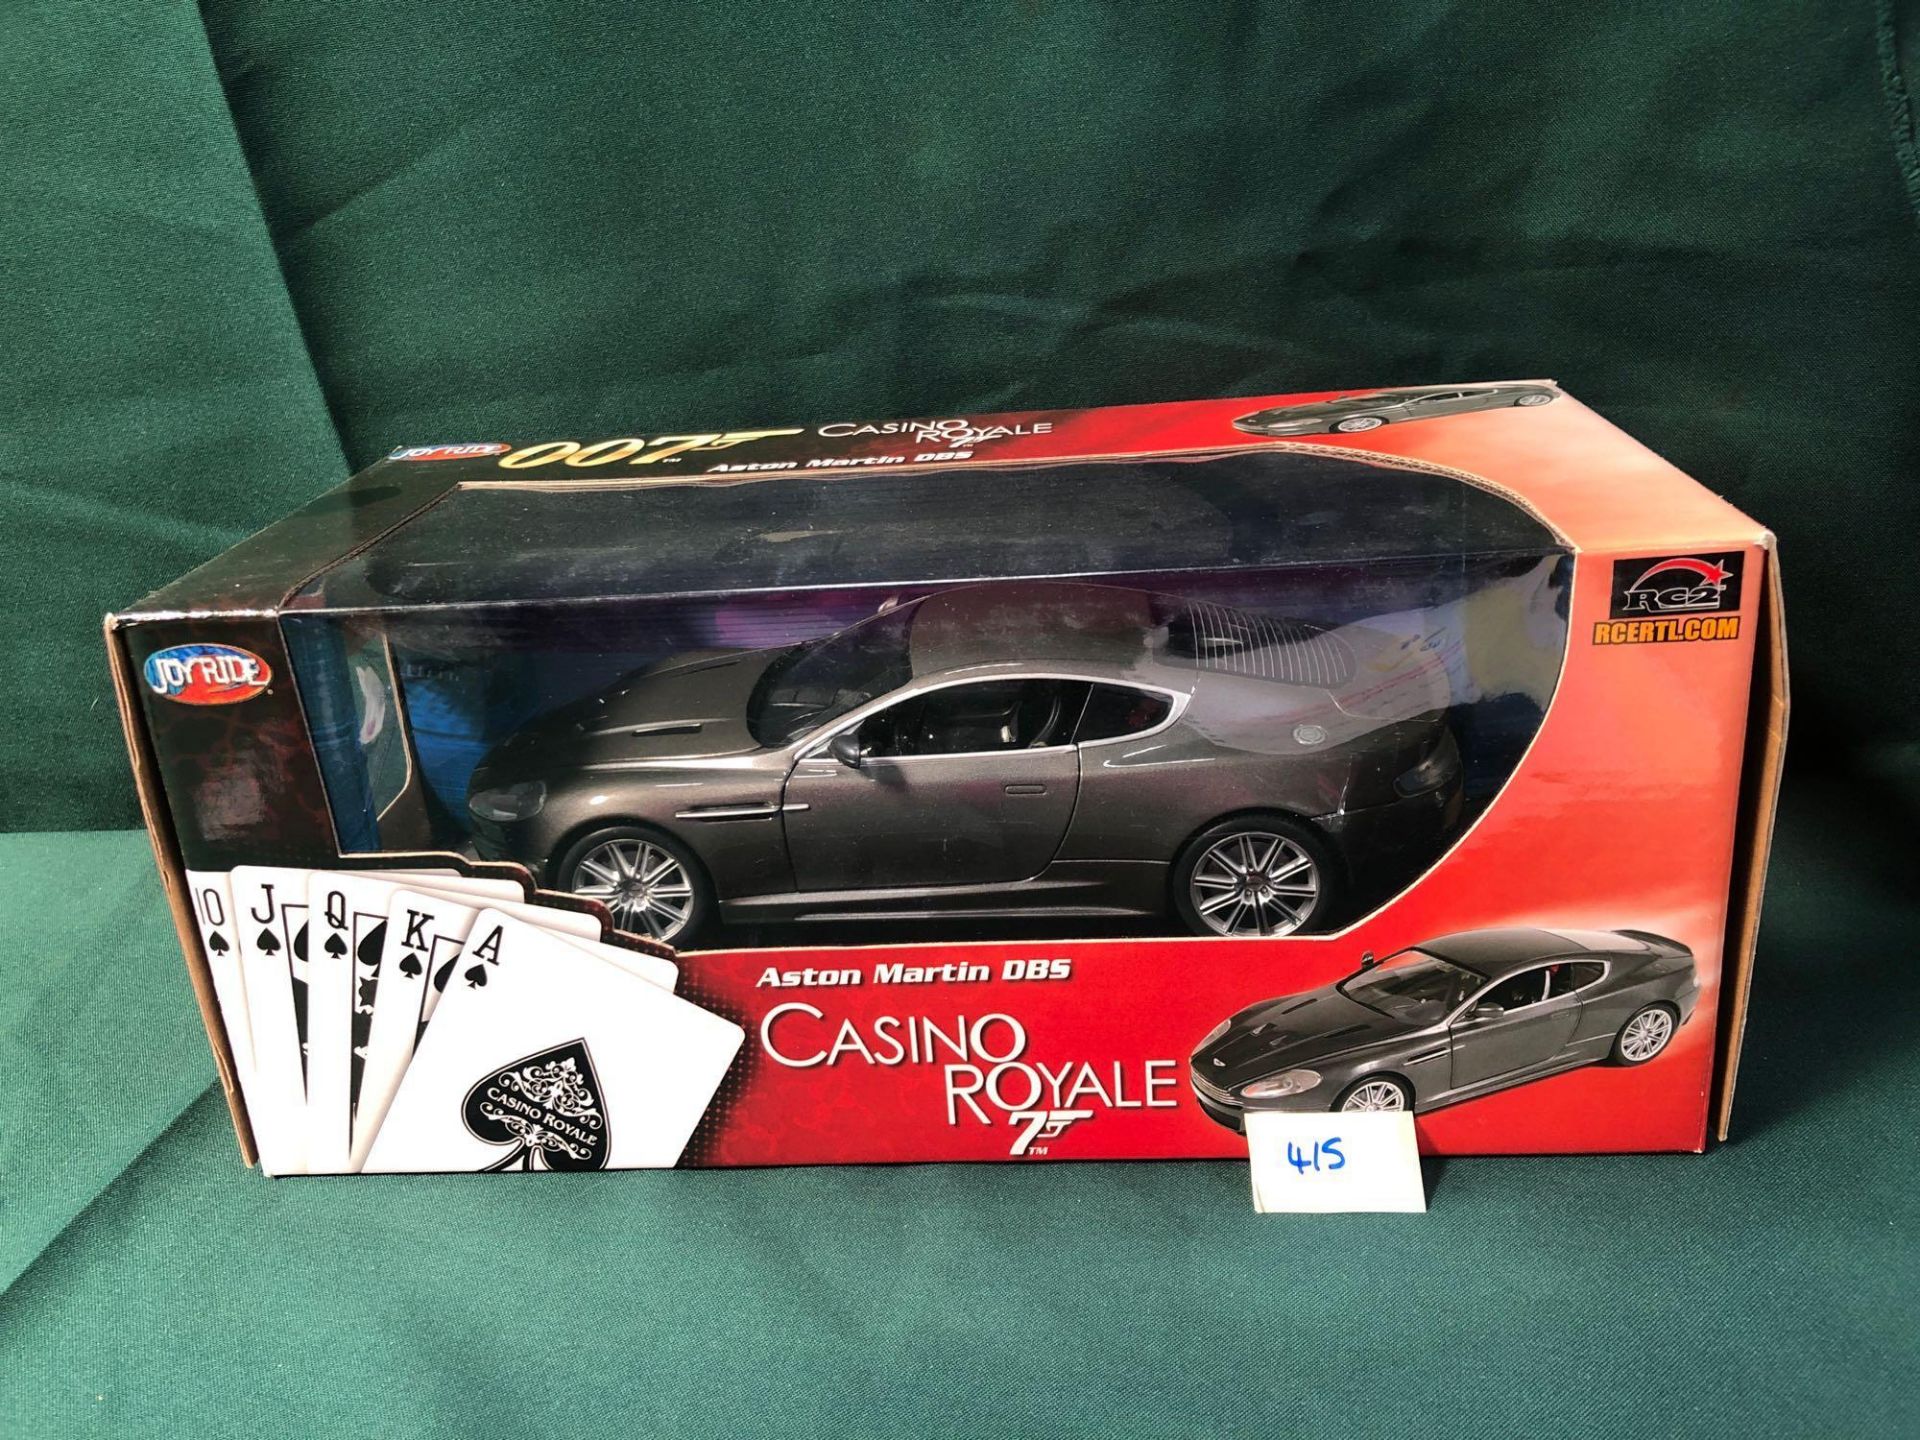 Joyride Model Car #33858 Aston Martin DBS Casino Royale James Bond 007